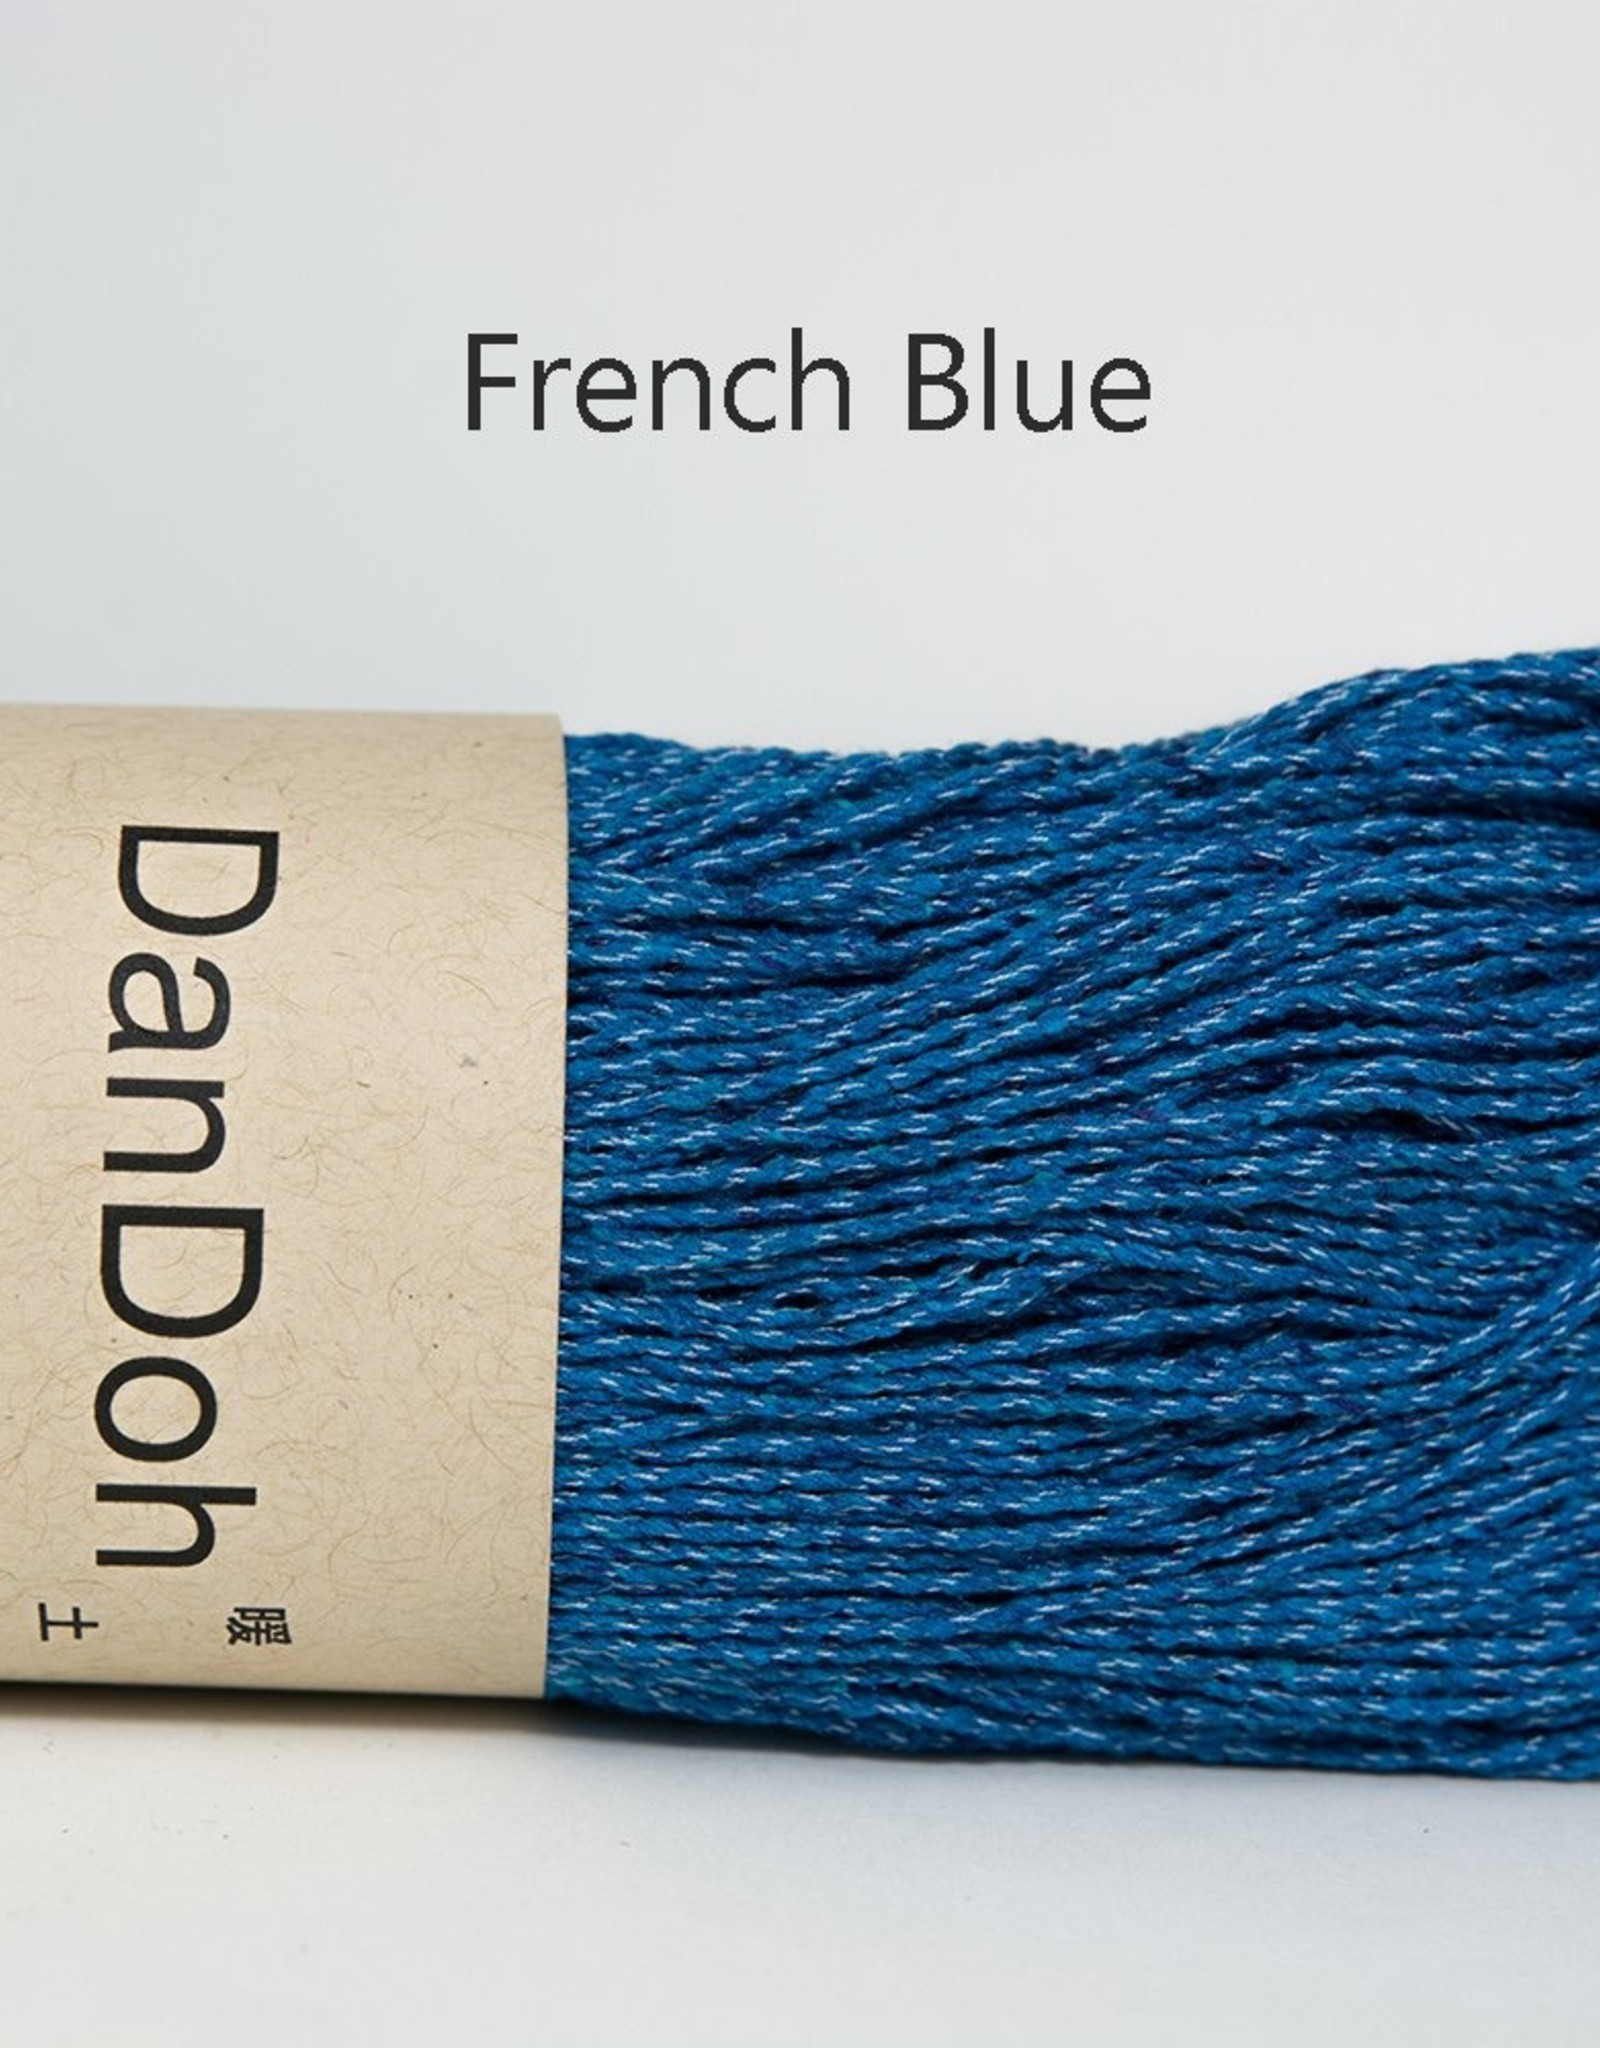 Dan Doh Silk + 10 french blue